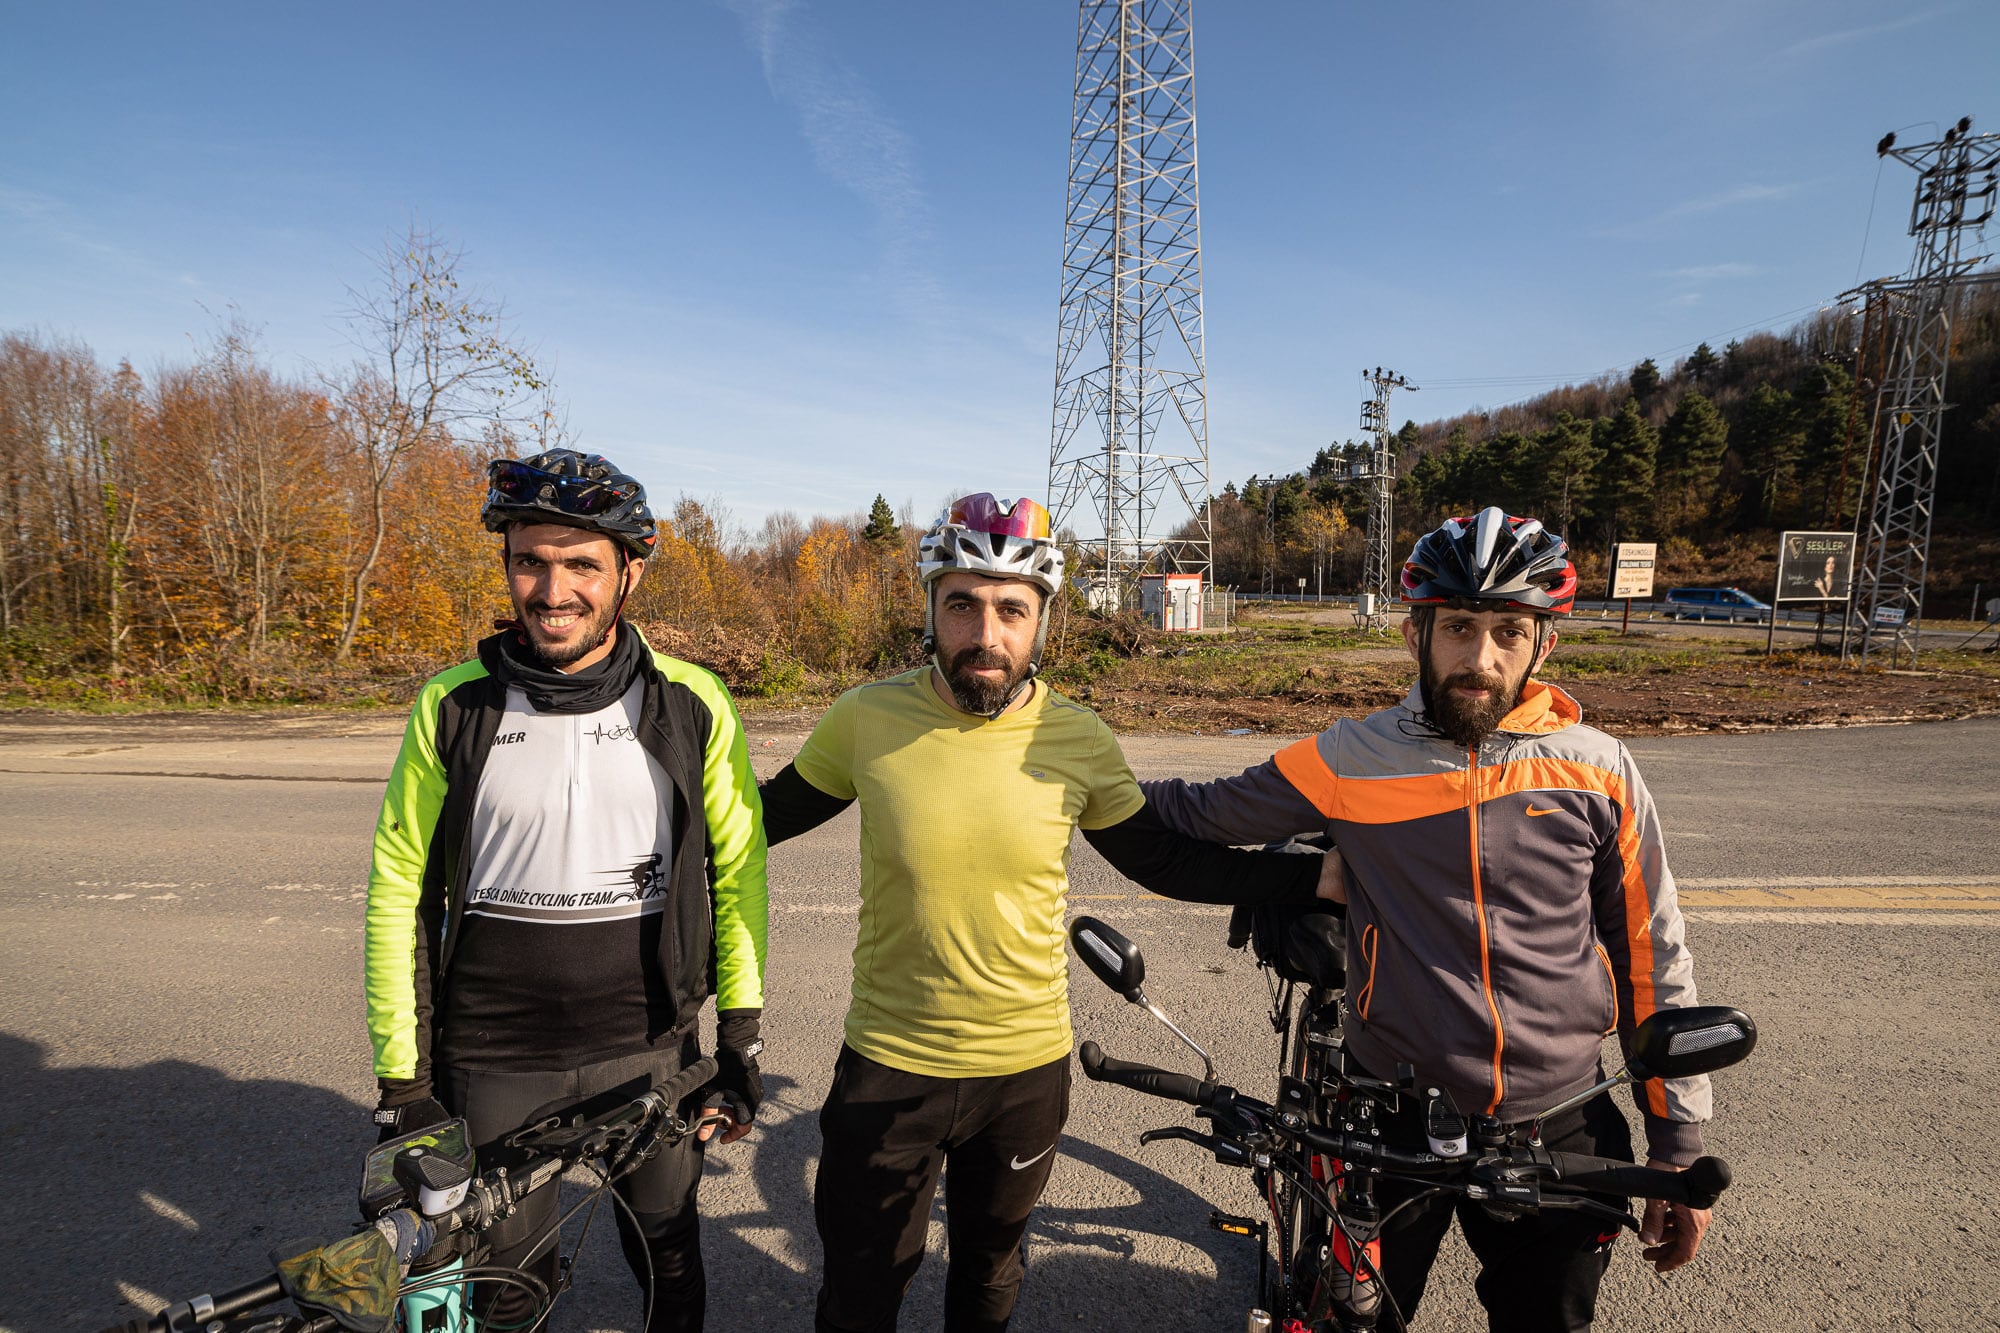 Omar, Sercan, Nasım, cyclists from Zonguldak